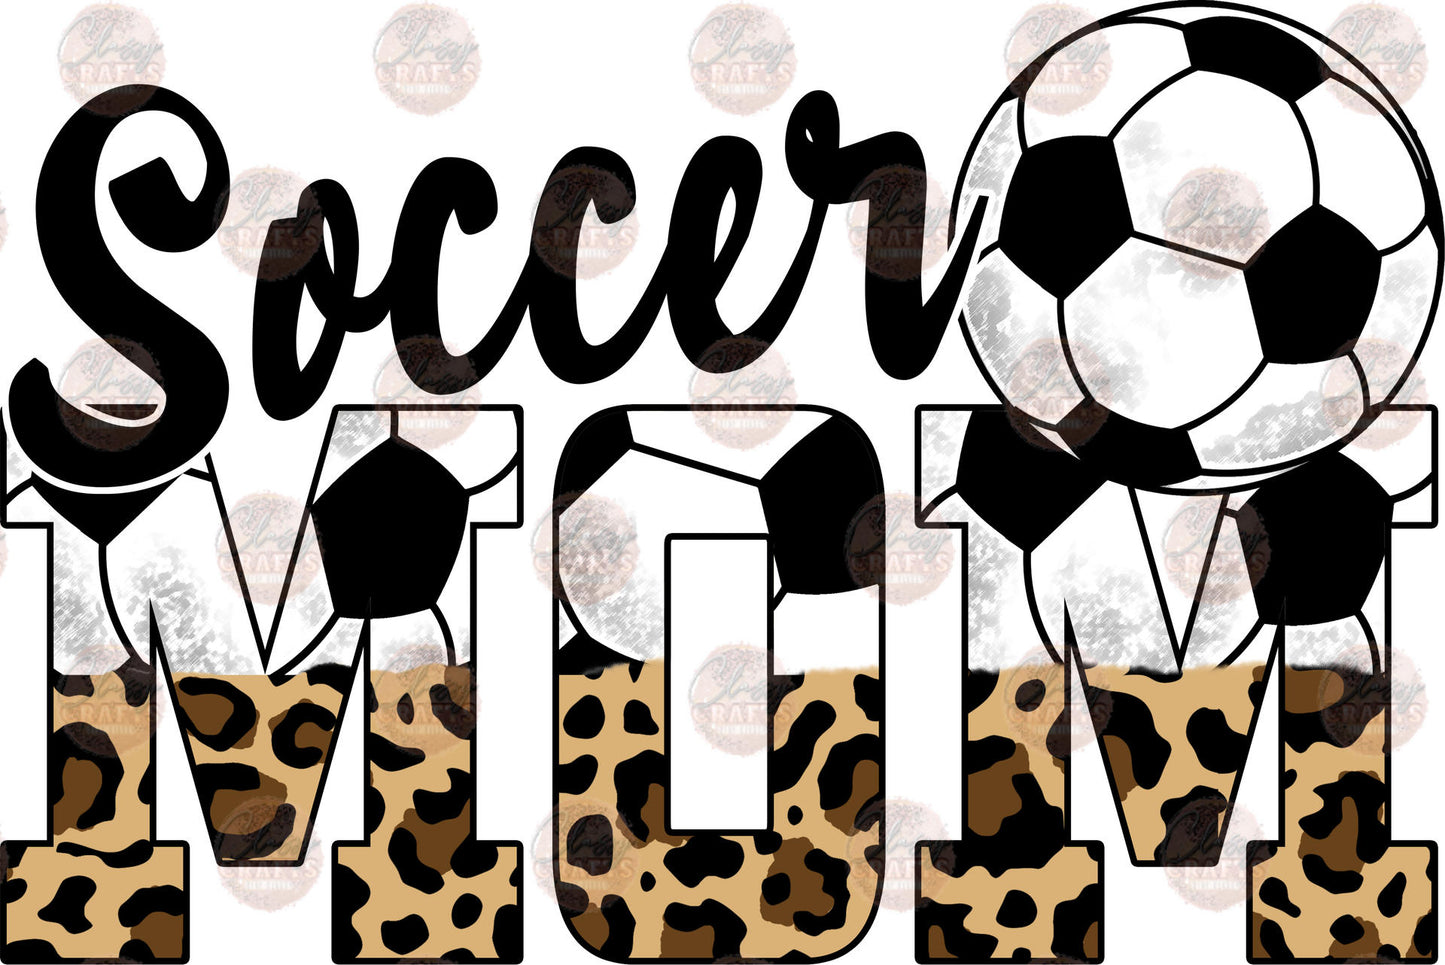 Soccer Mom Cheetah Transfer